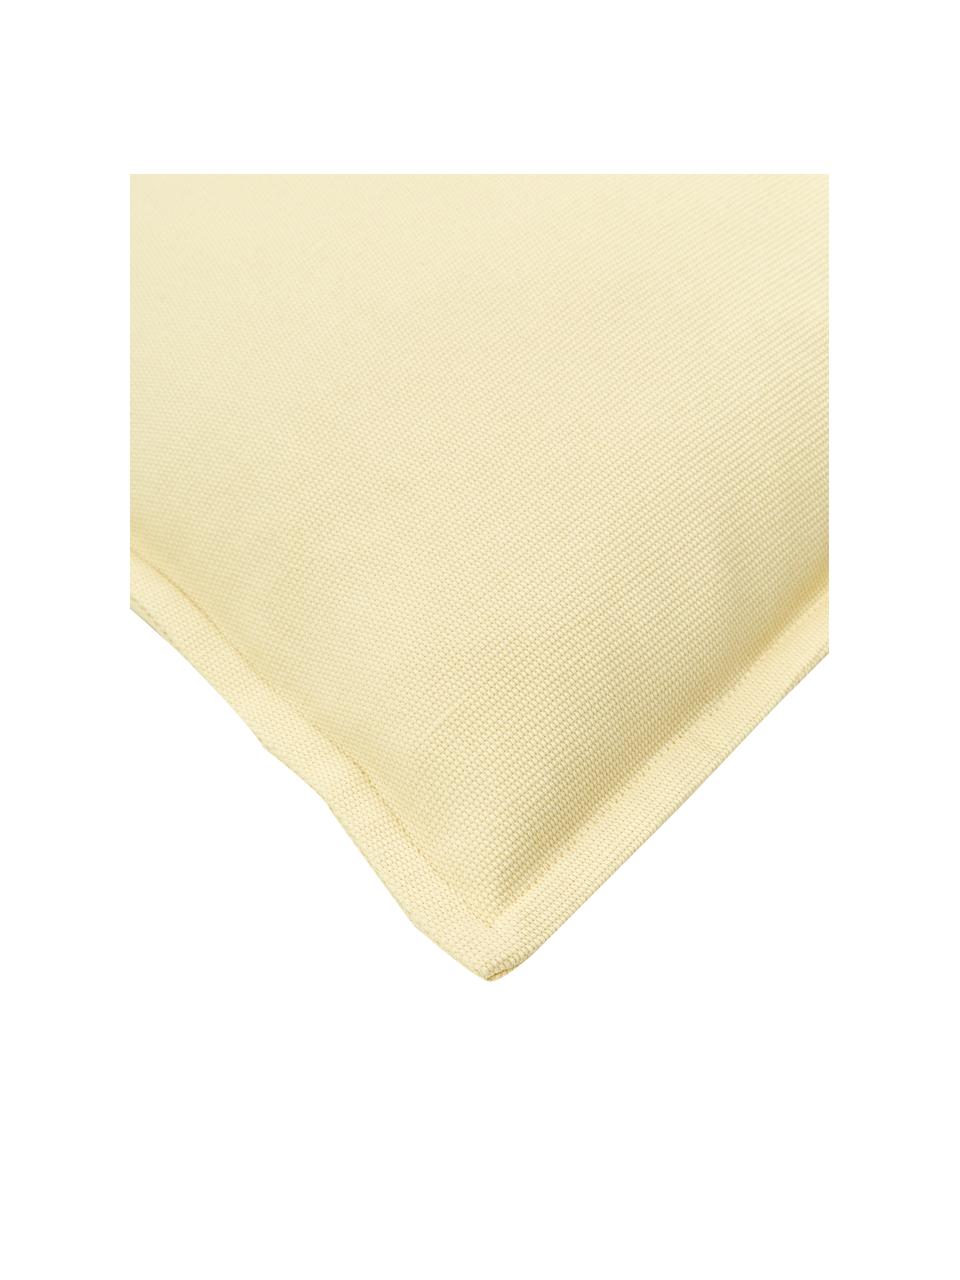 Baumwoll-Kissenhülle Mads mit Kederumrandung in Hellgelb, 100% Baumwolle, Gelb, B 30 x L 50 cm